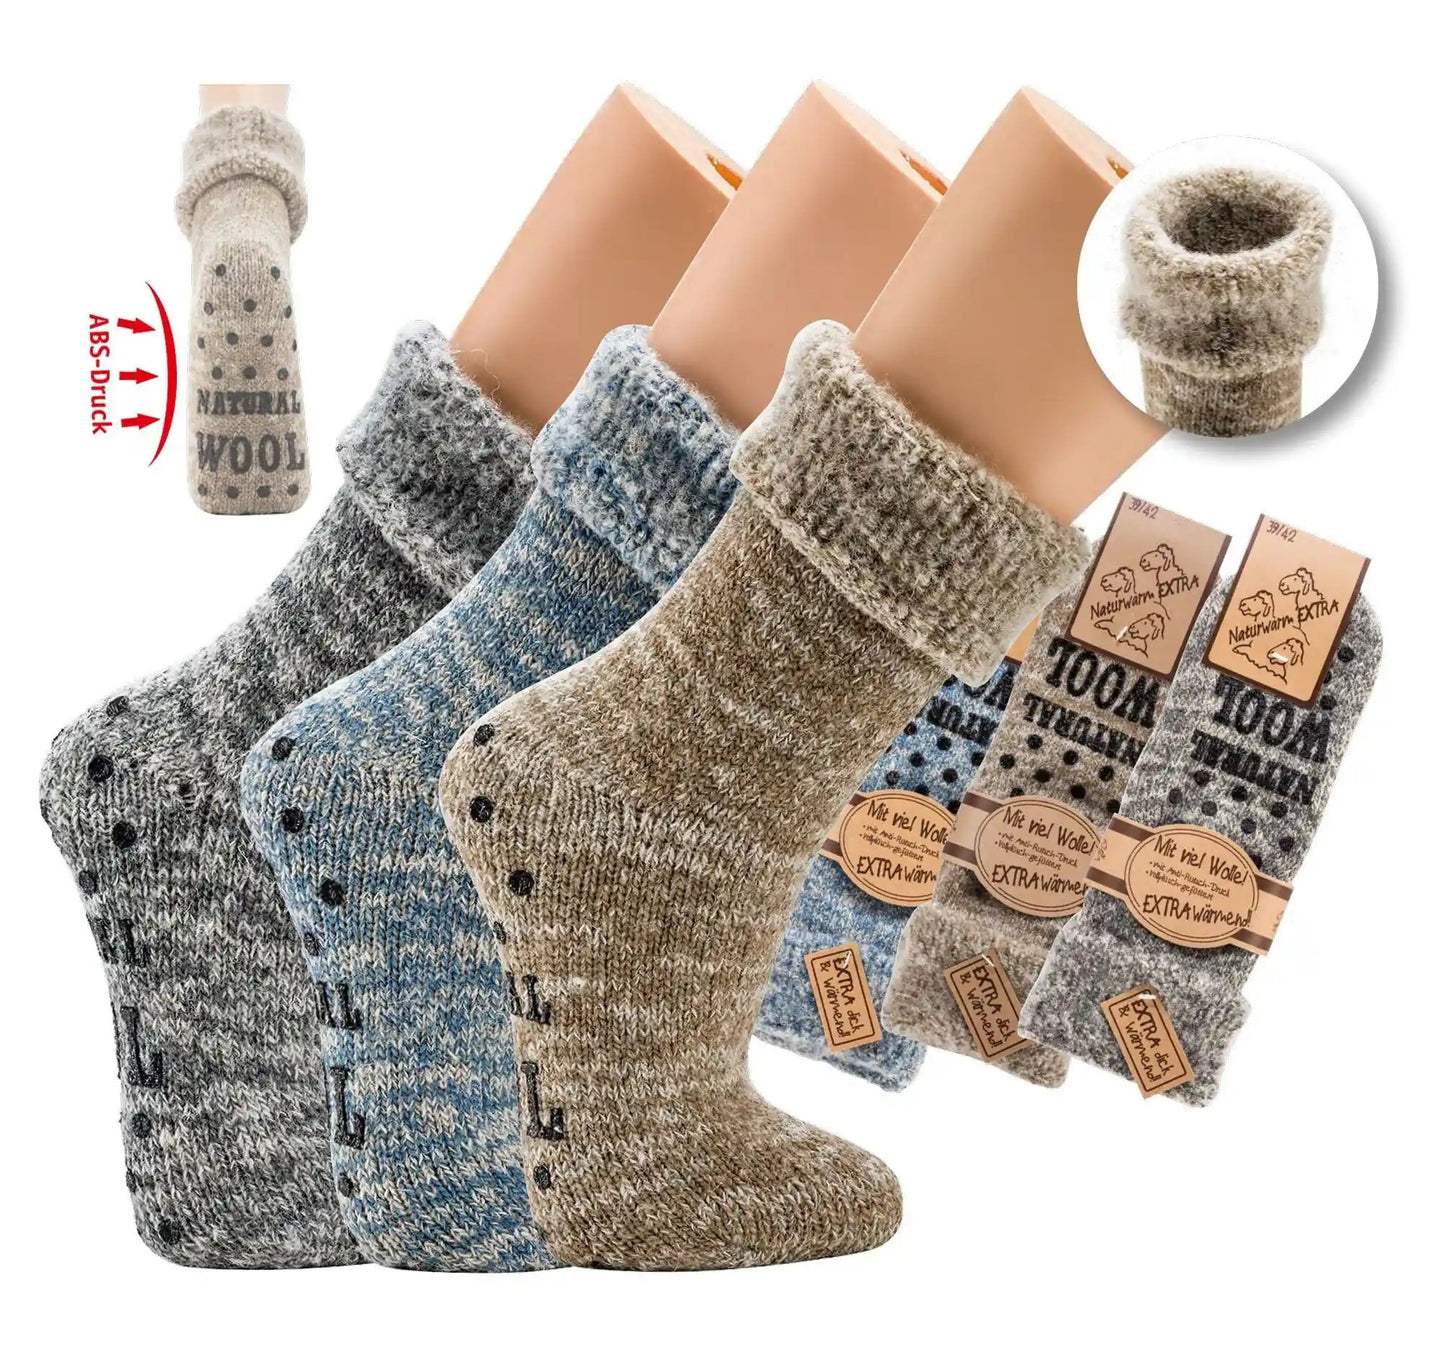 1 pair of MEGA 65% wool thermal ABS socks home socks anti-slip size 35-50